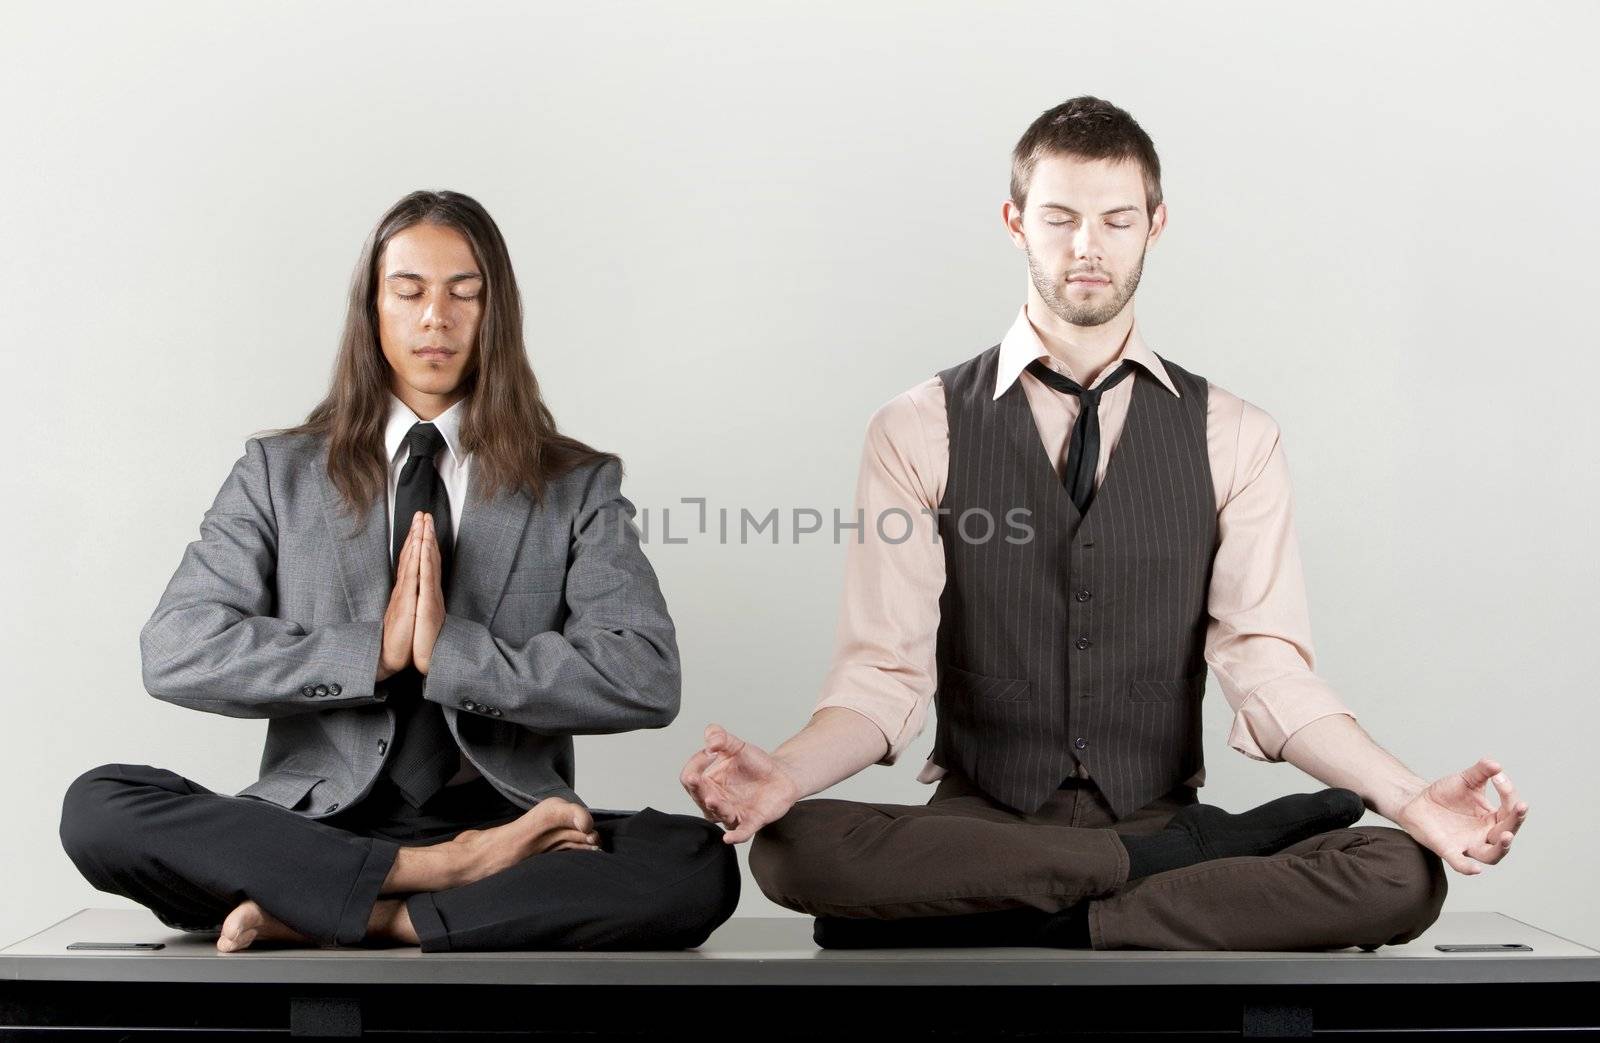 Two businessmen meditating on their office desk